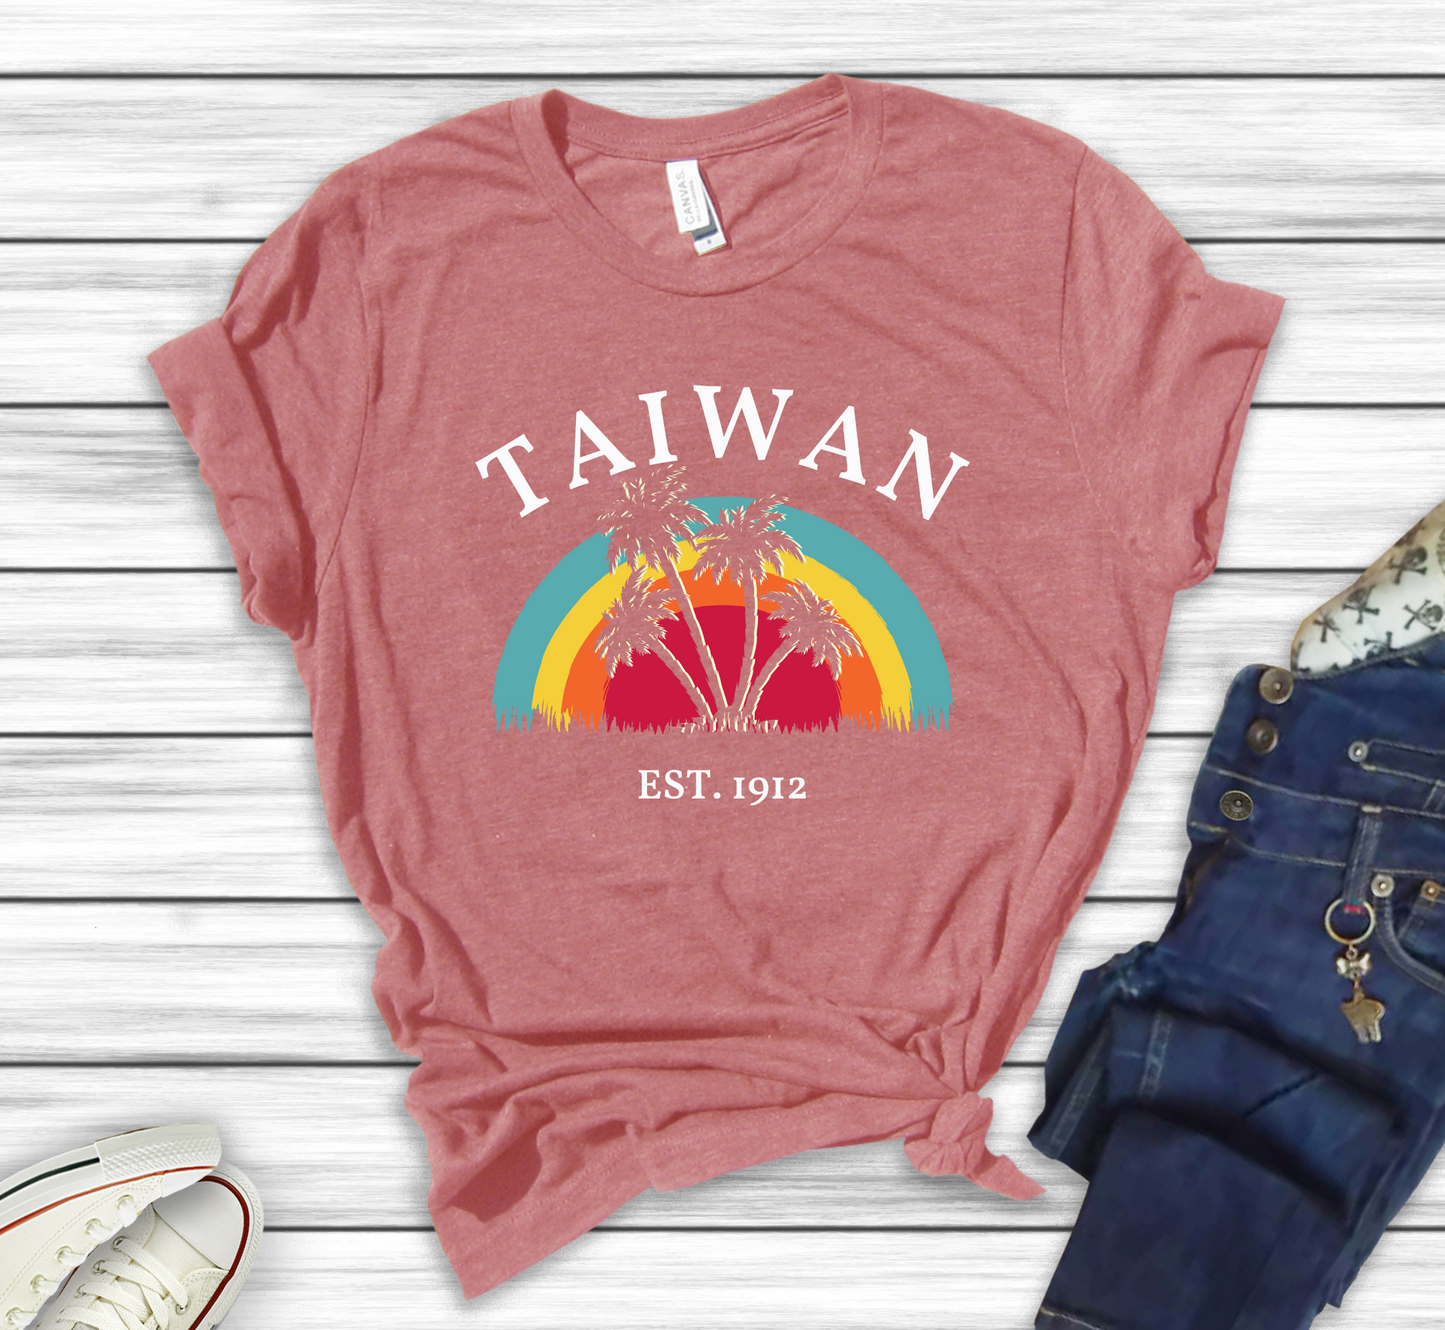 Taiwan Shirt, Unisex Jersey Cotton Short Sleeve Plus Size Tee